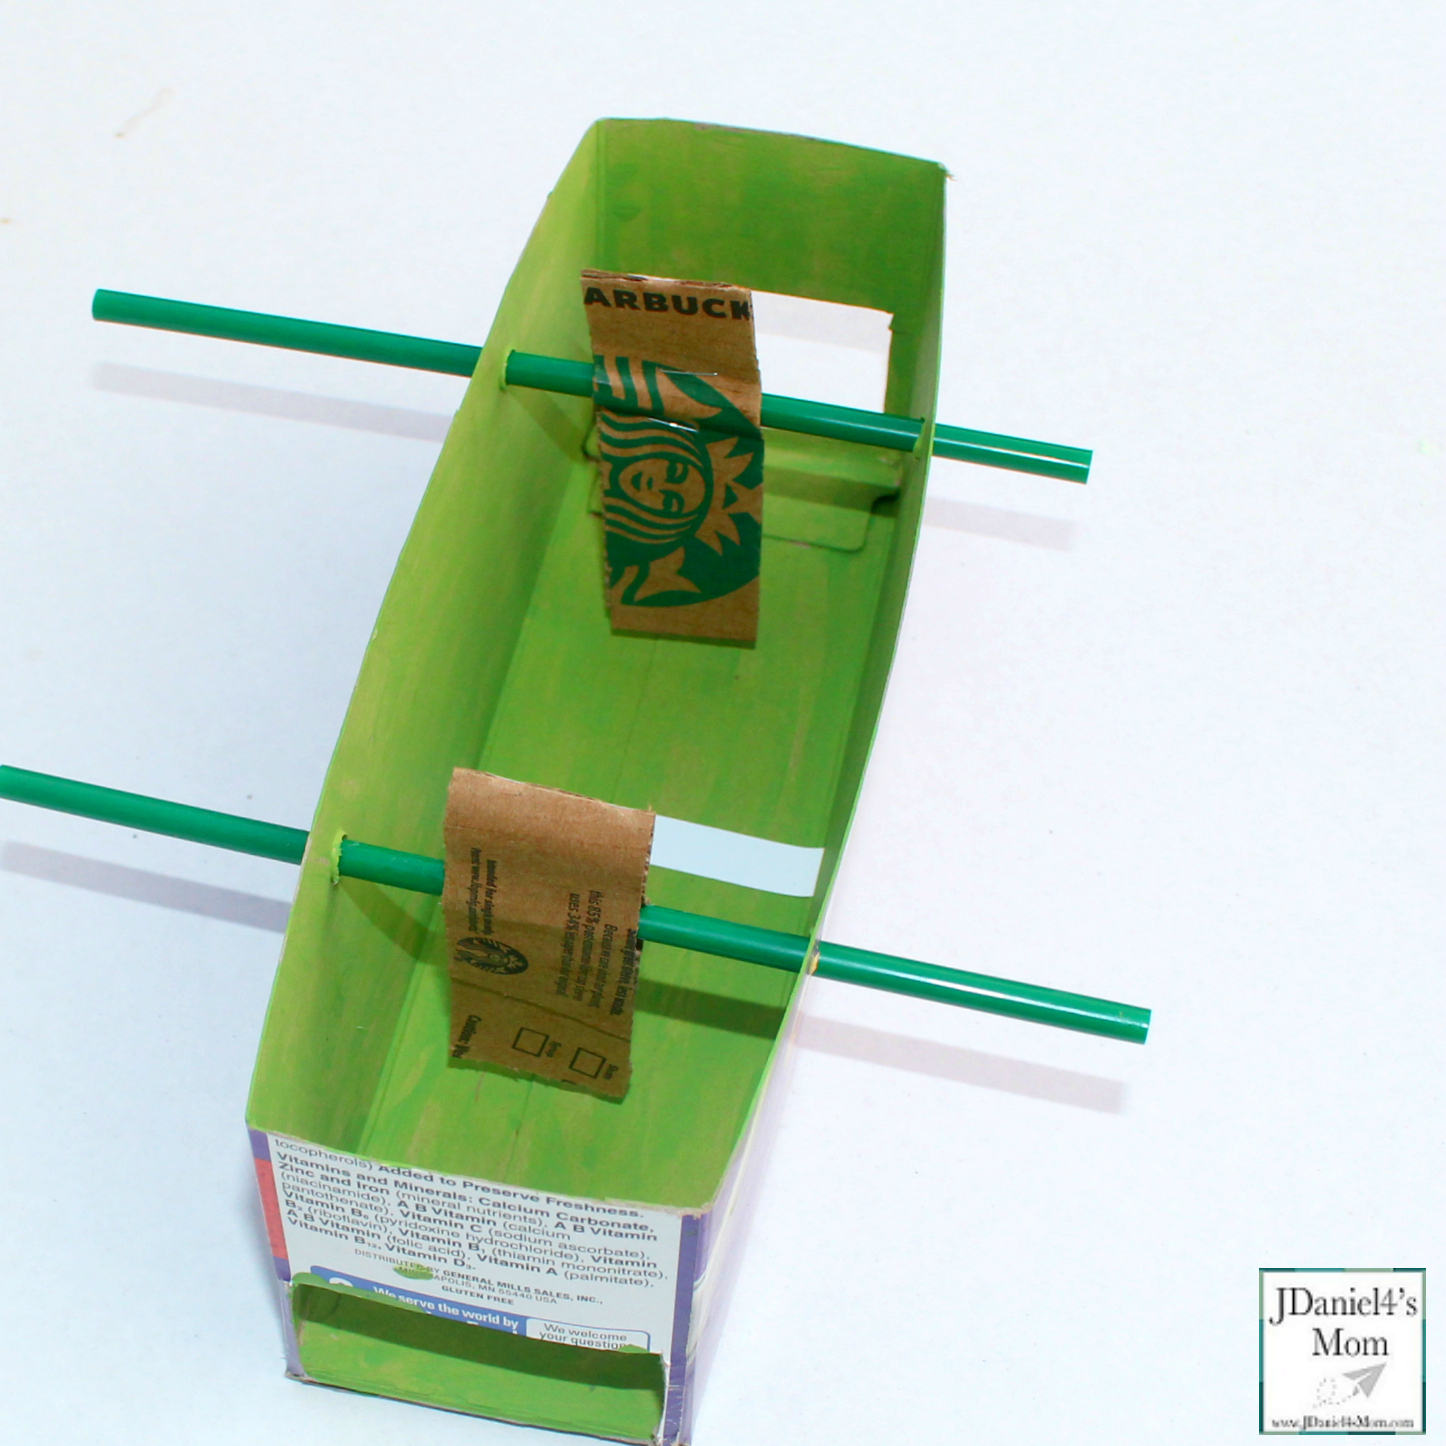 Cardboard Box Football or Soccer Themed Foosball Table - Adding the Straw and Cardboard